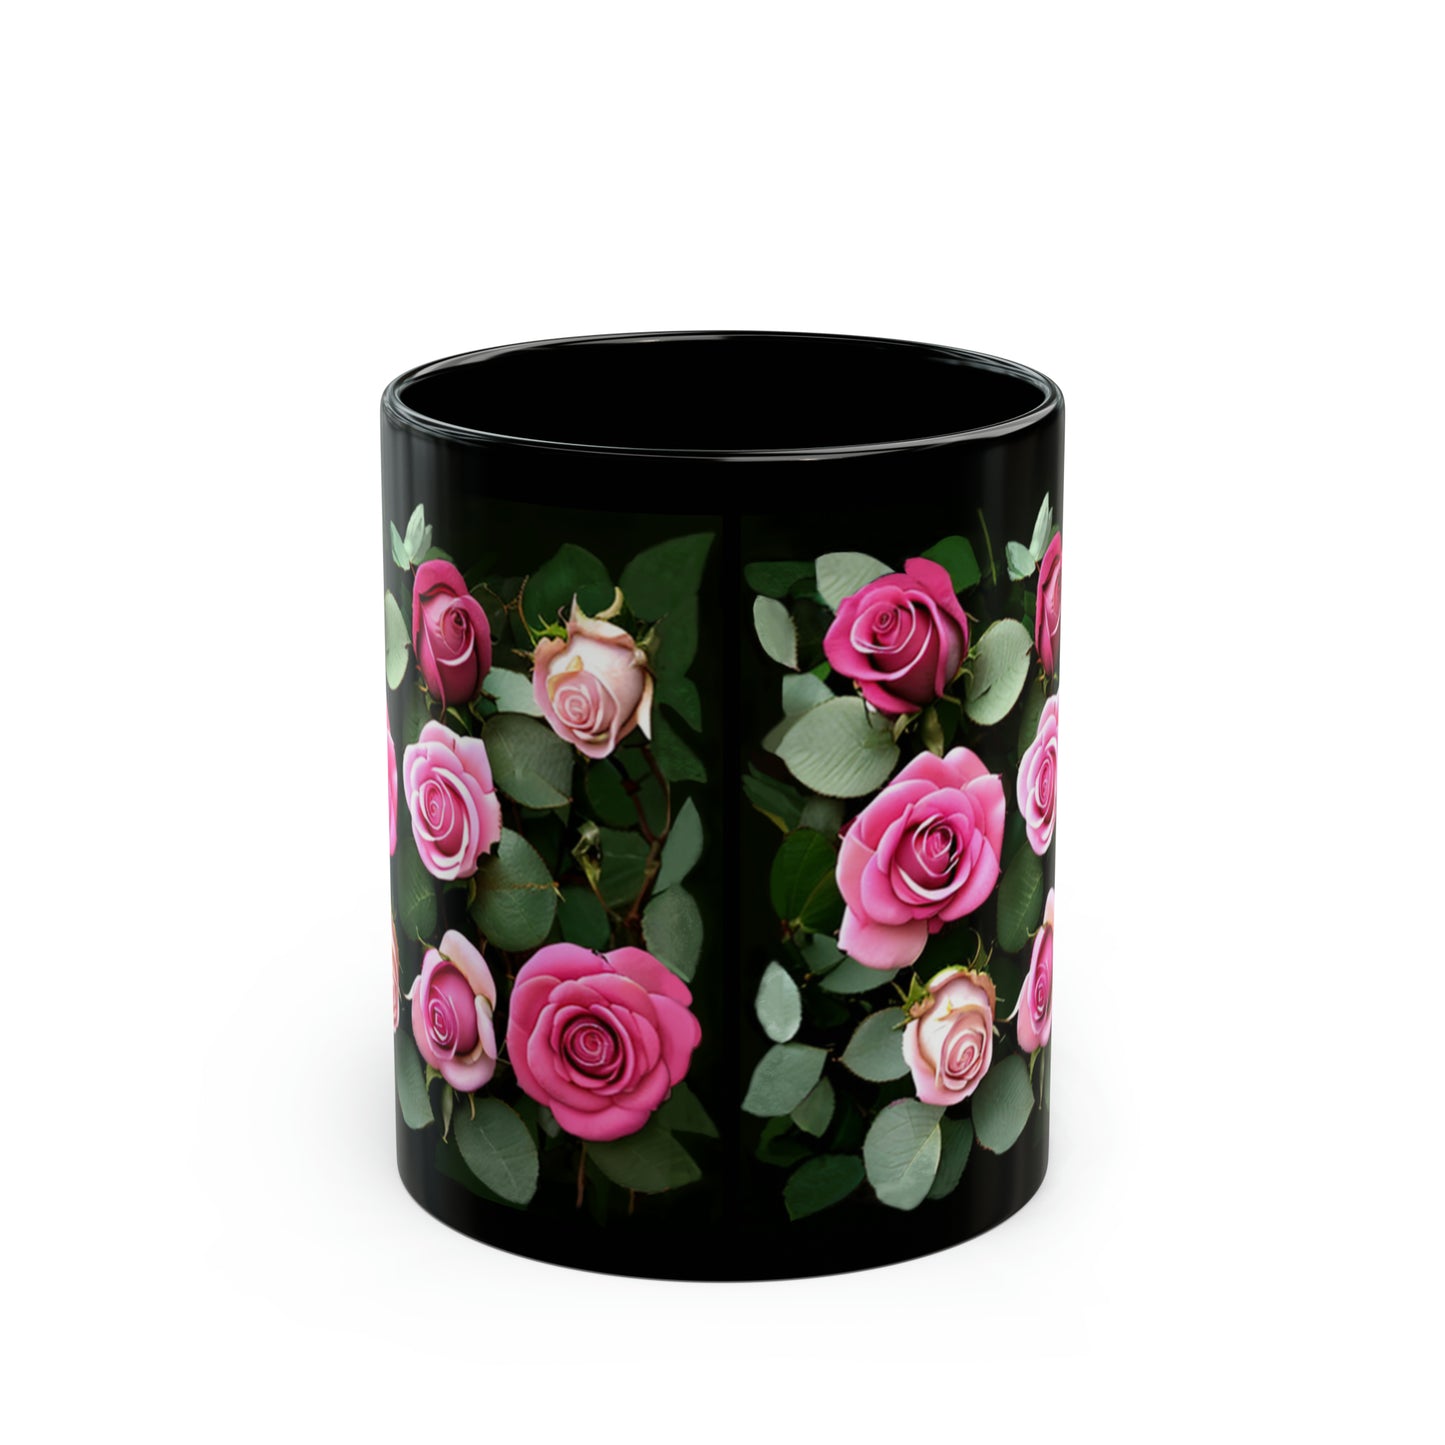 Lovely Pink Roses Black Mug 11oz